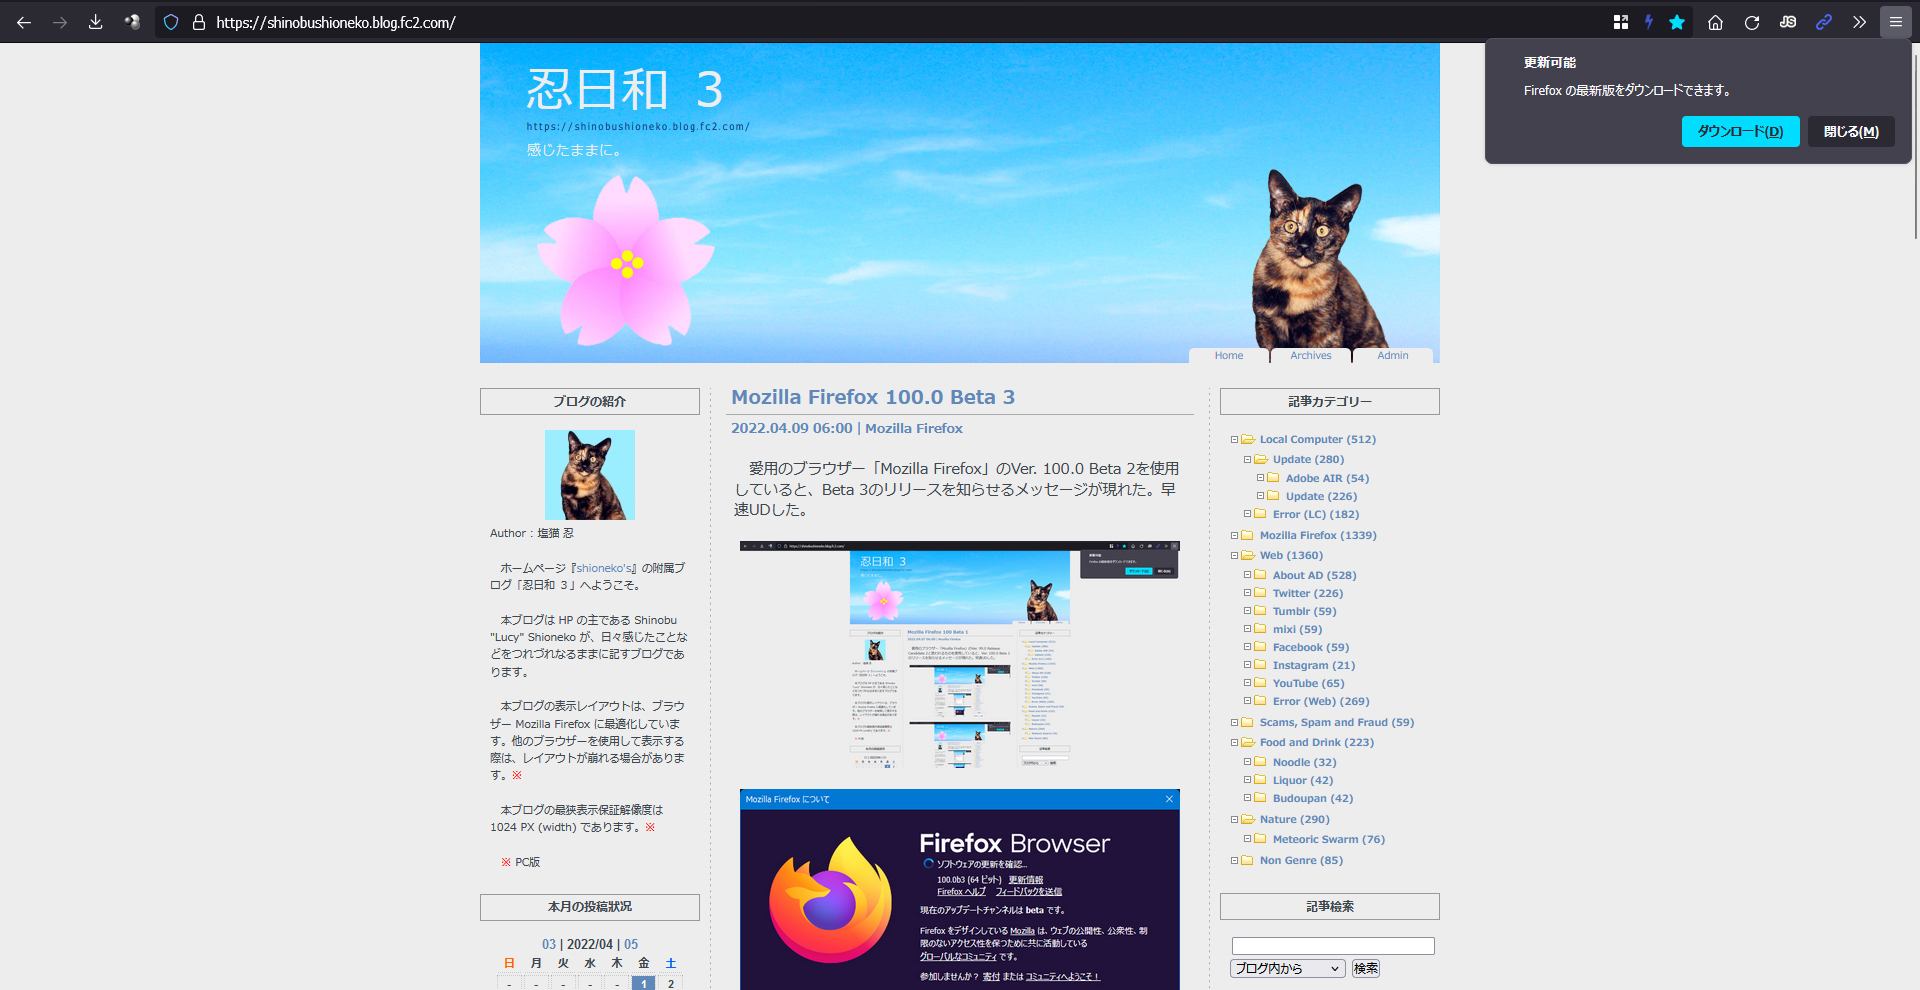 Mozilla Firefox 100.0 Beta 4